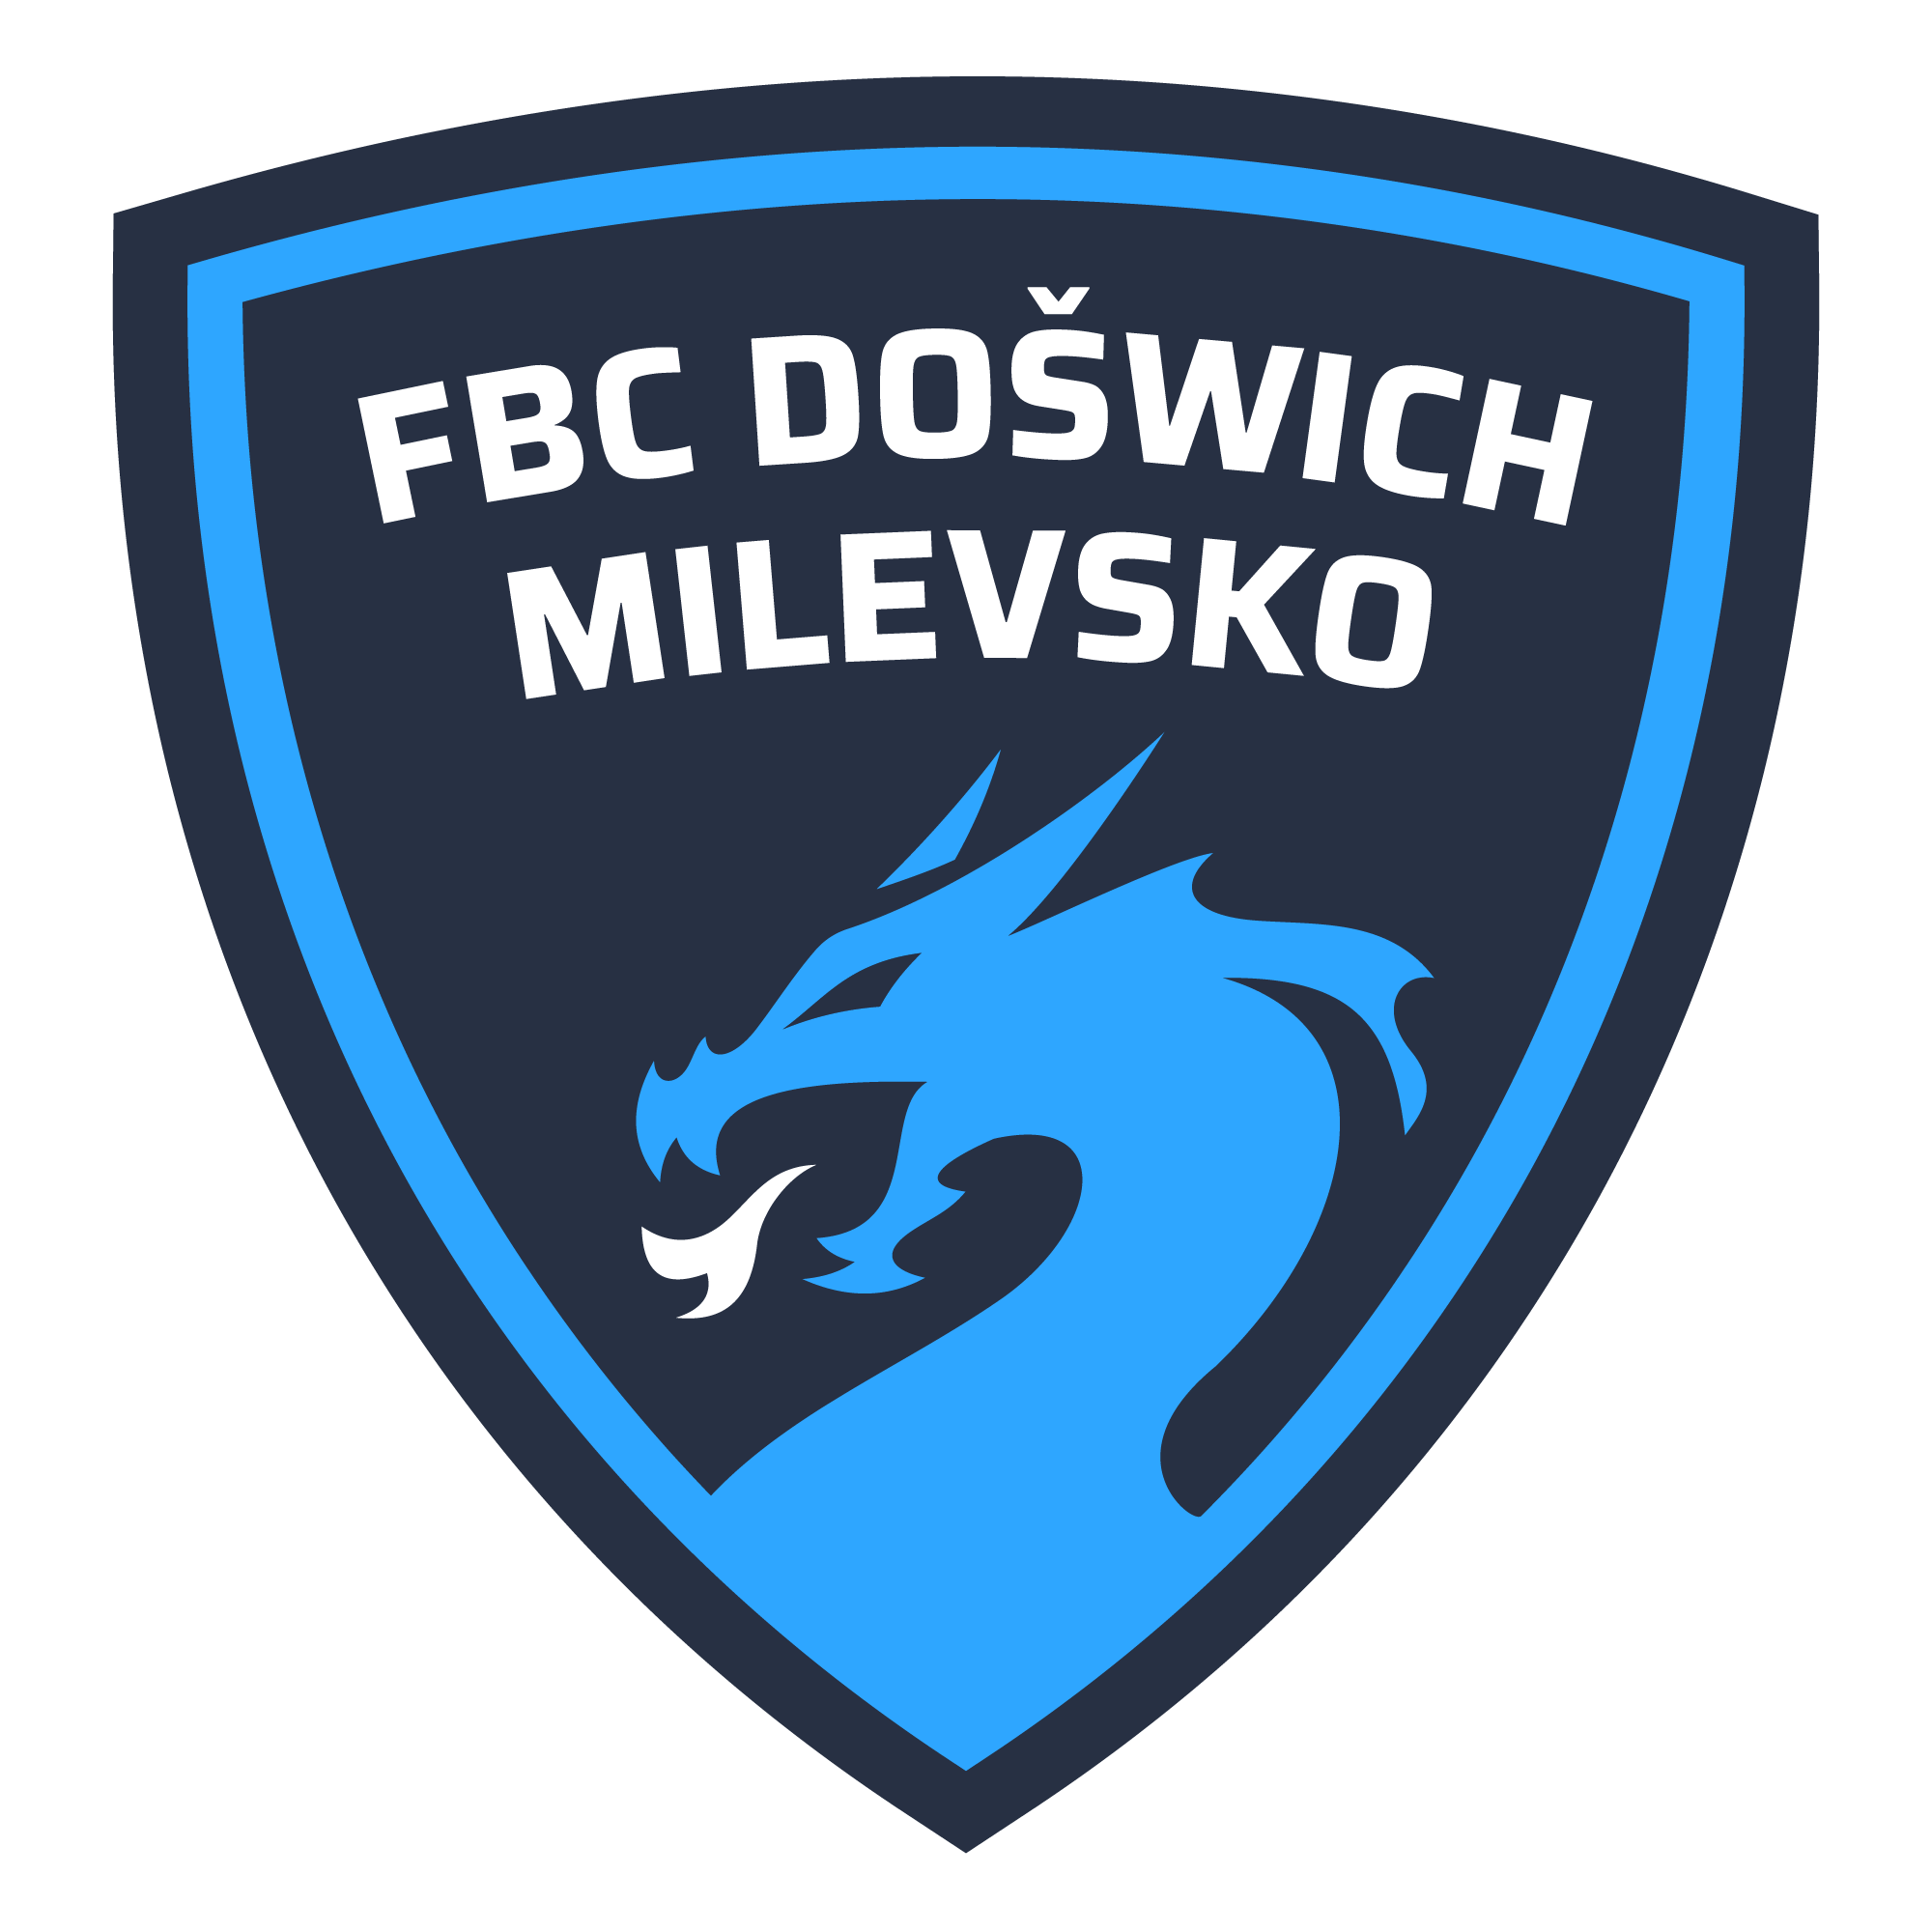 FBC Došwich Milevsko